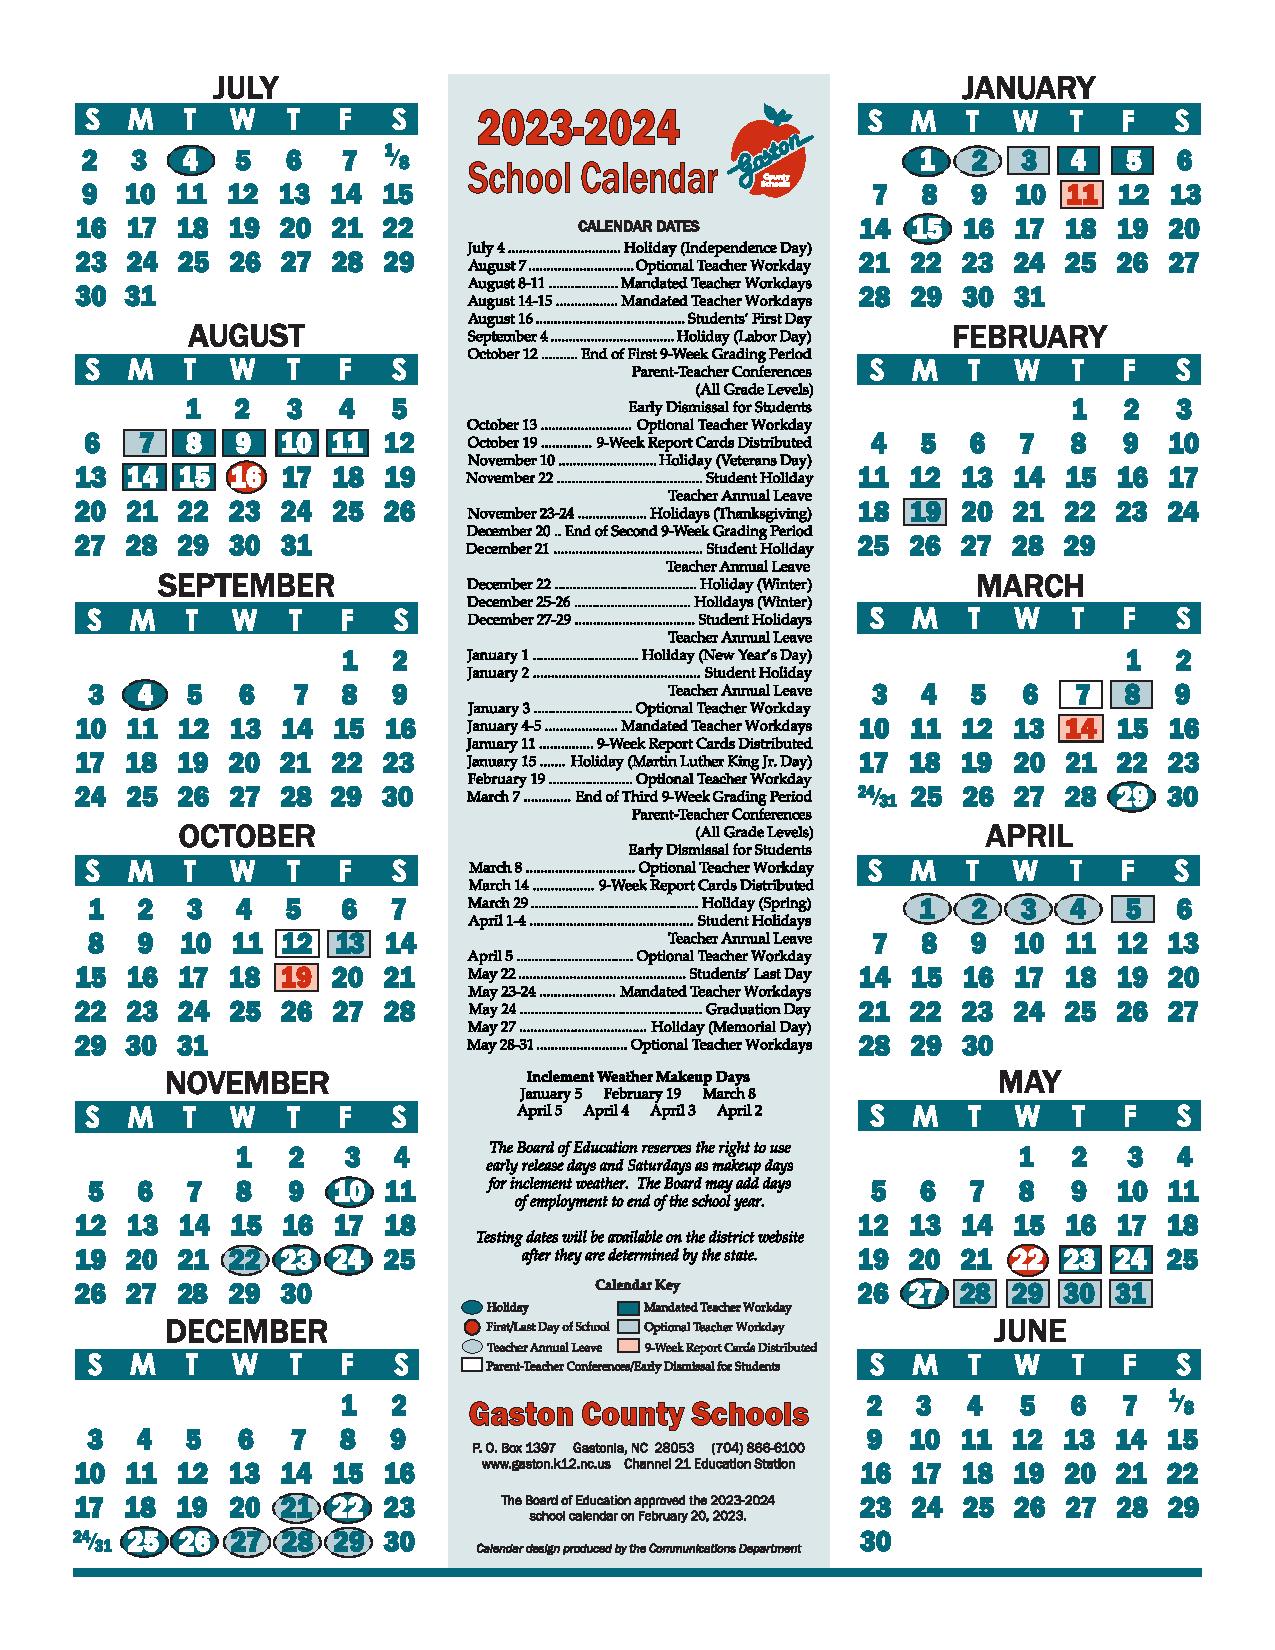 Gaston County Schools Calendar 20232024 with Holidays